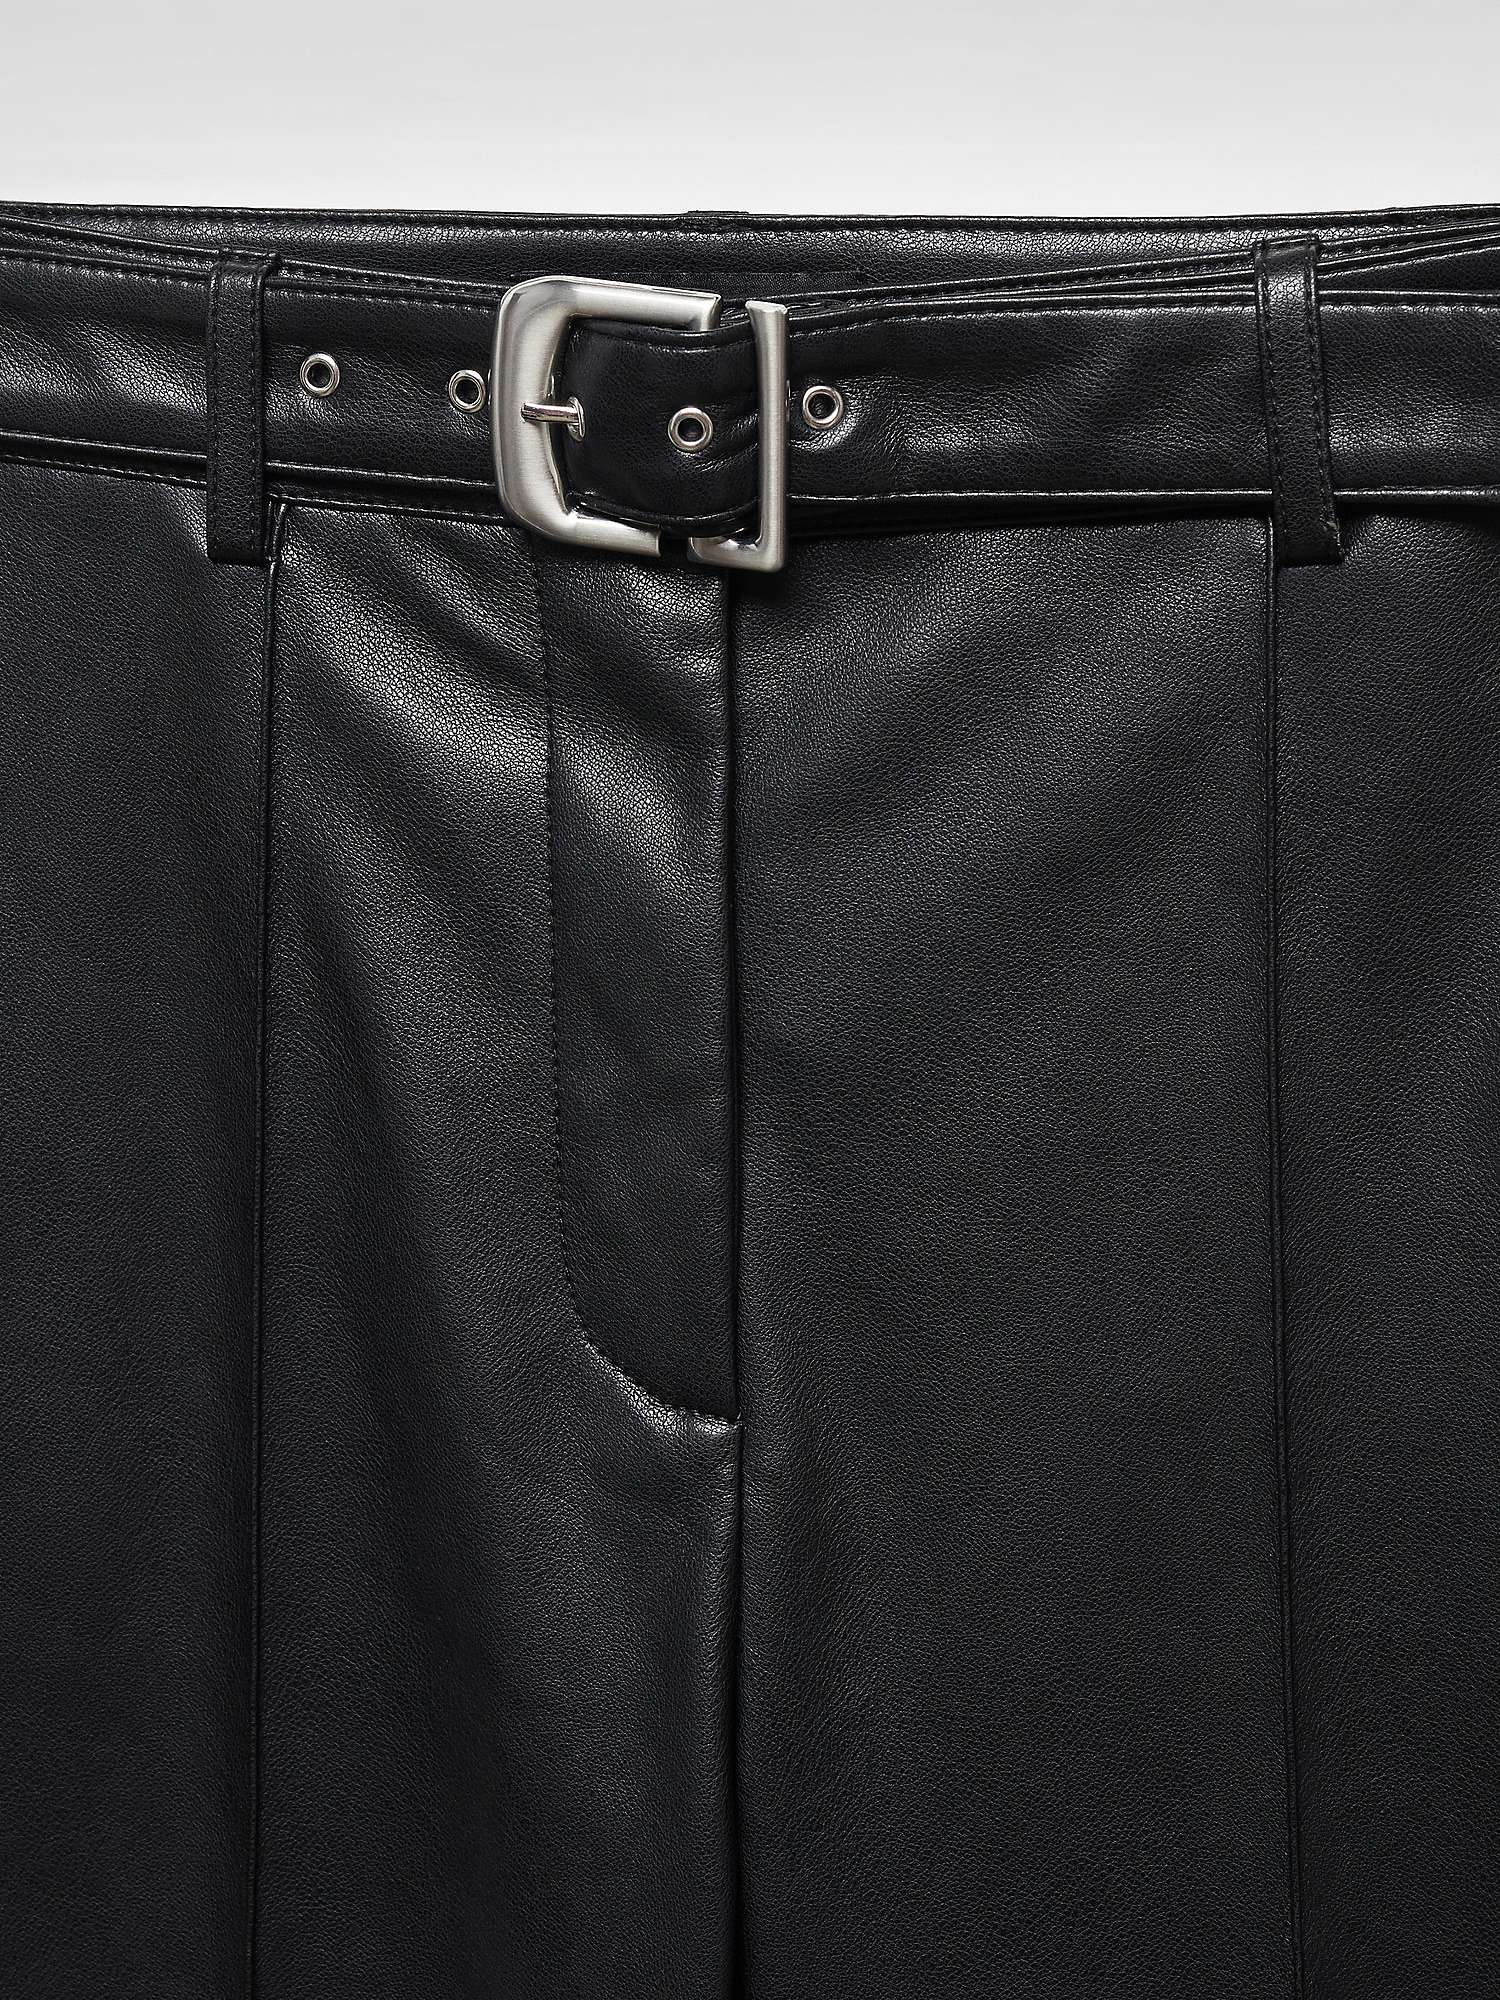 Mango Anita Faux Leather Belt Trousers at John Lewis & Partners